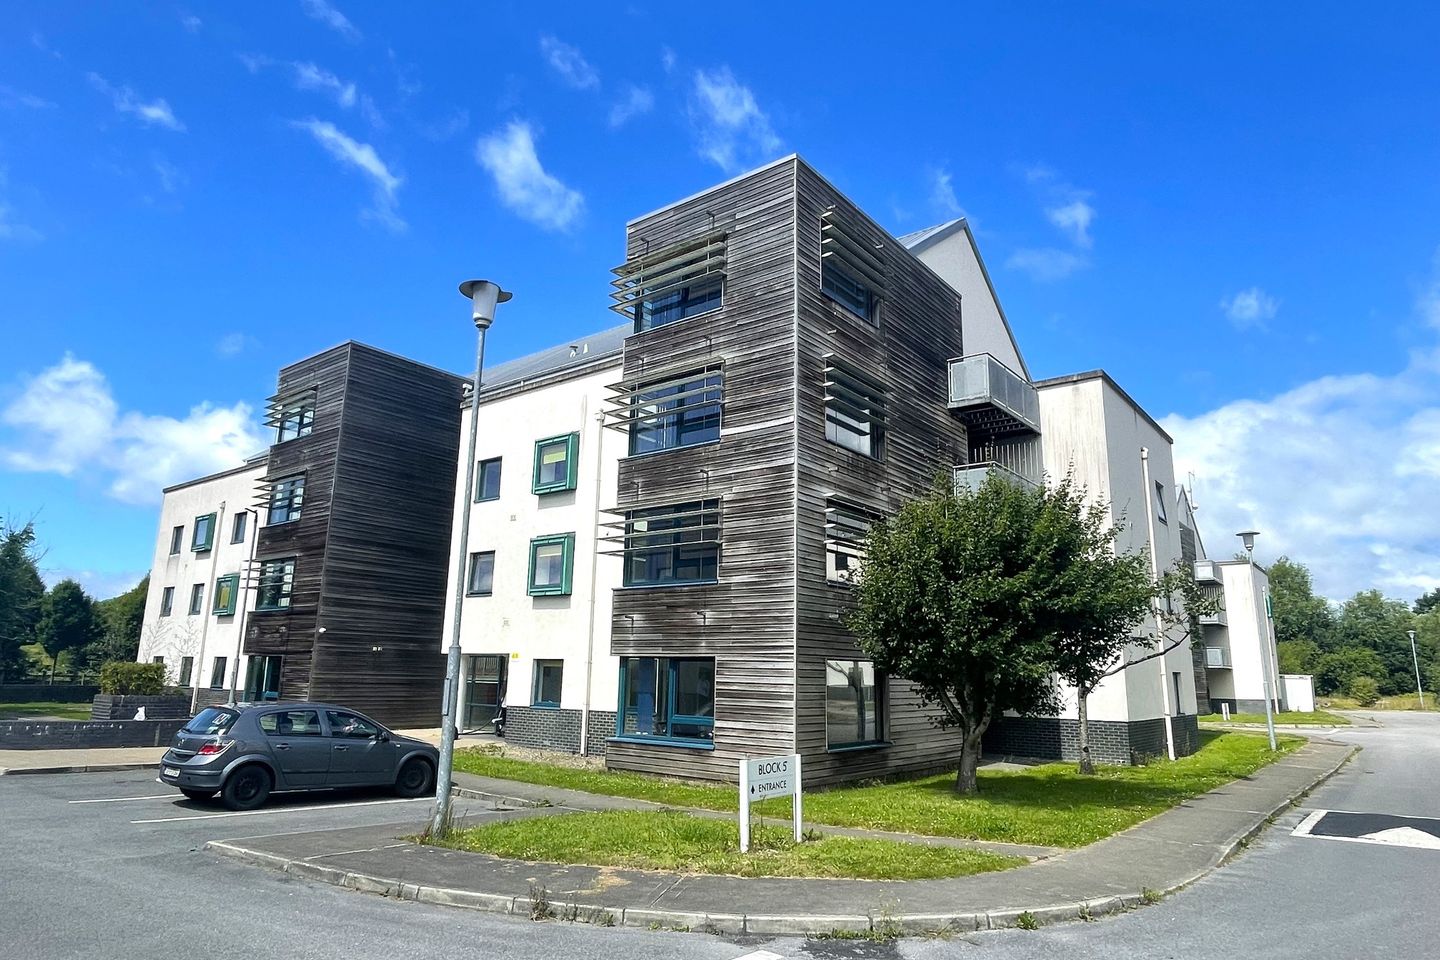 Apartment 526, Block 5, Brookfield Hall, Castletroy, Co. Limerick